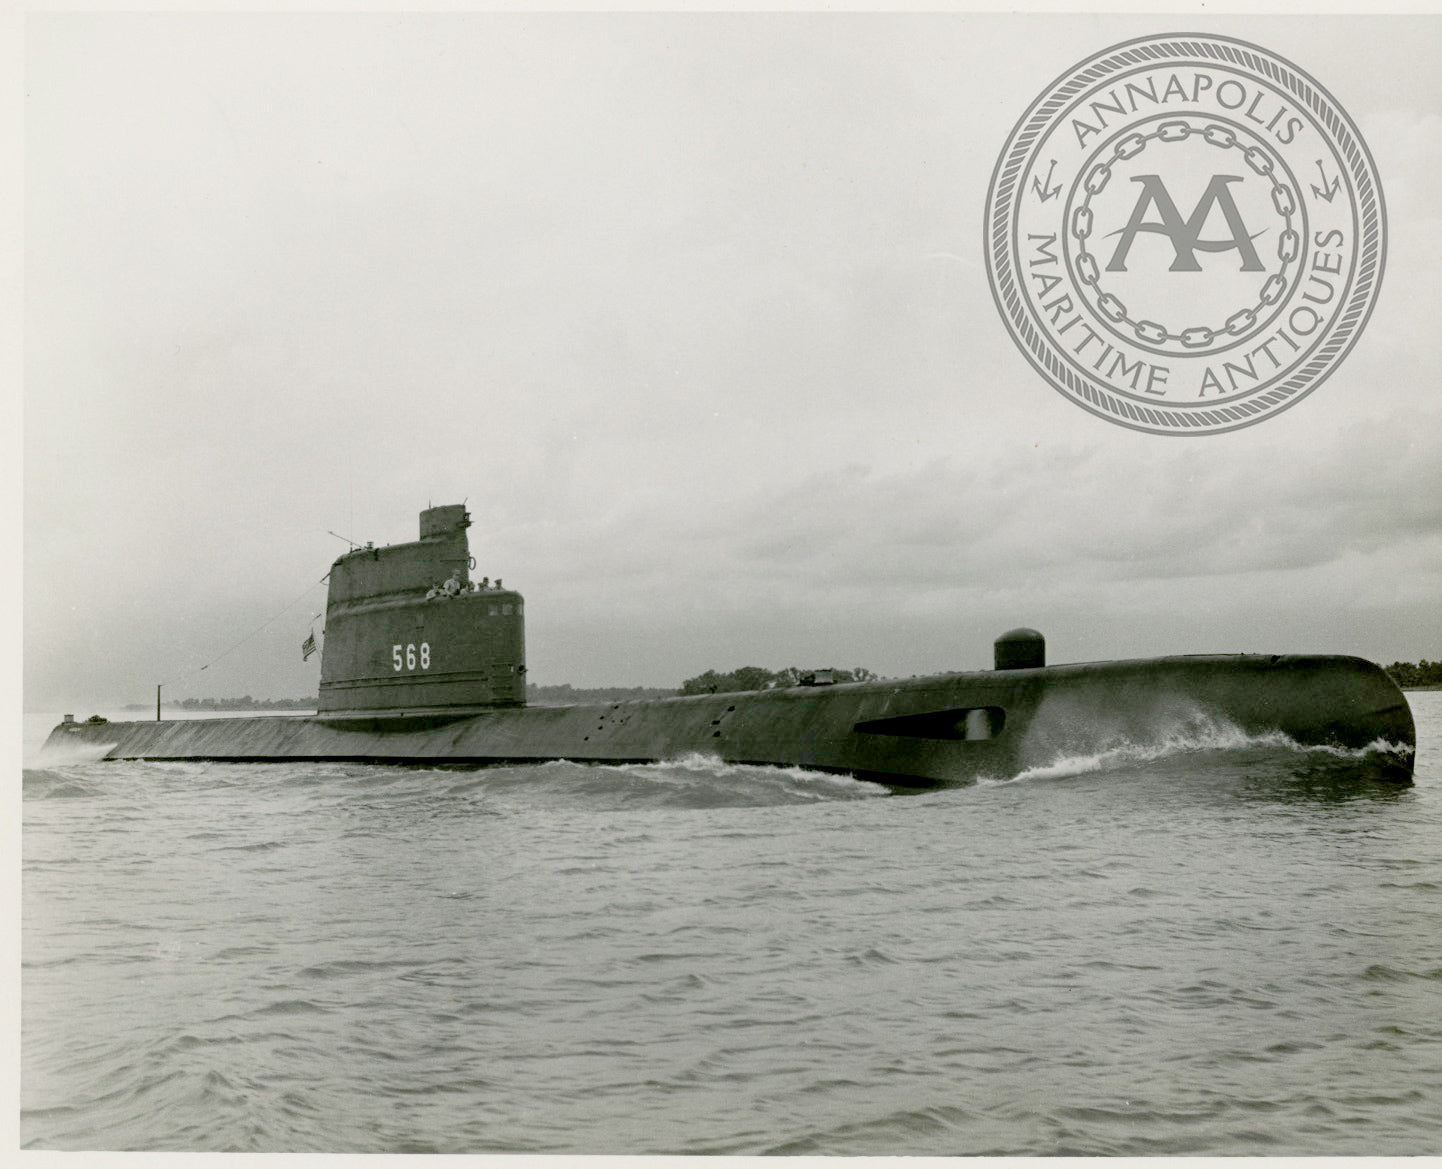 USS Harder (SS-568) Submarine